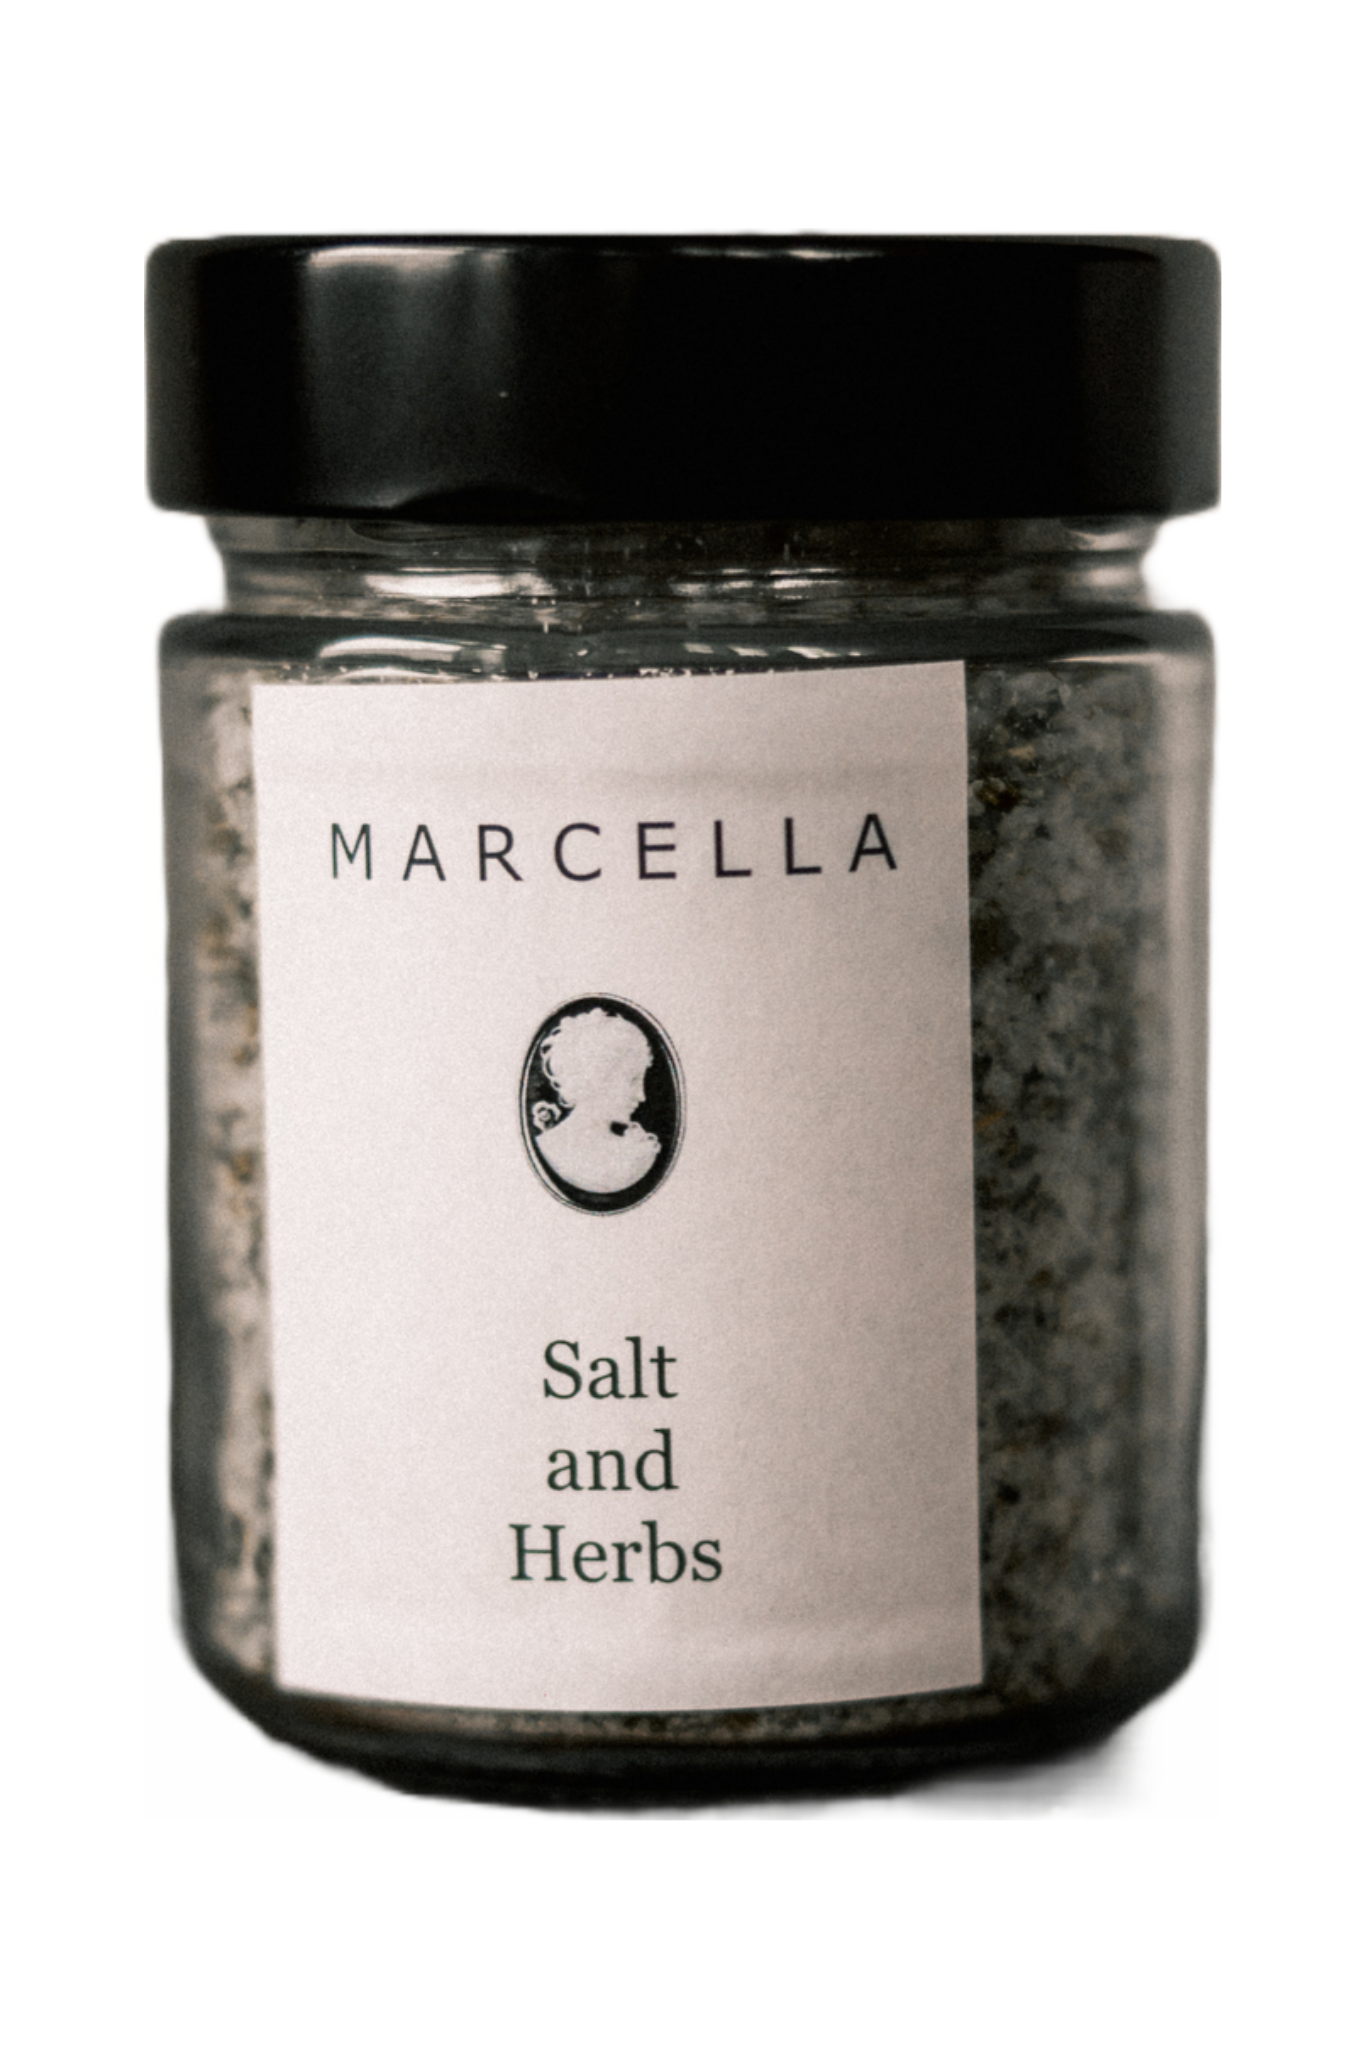 Salt and herbs - sare cu ierburi aromatice, 220g, marcella signature products